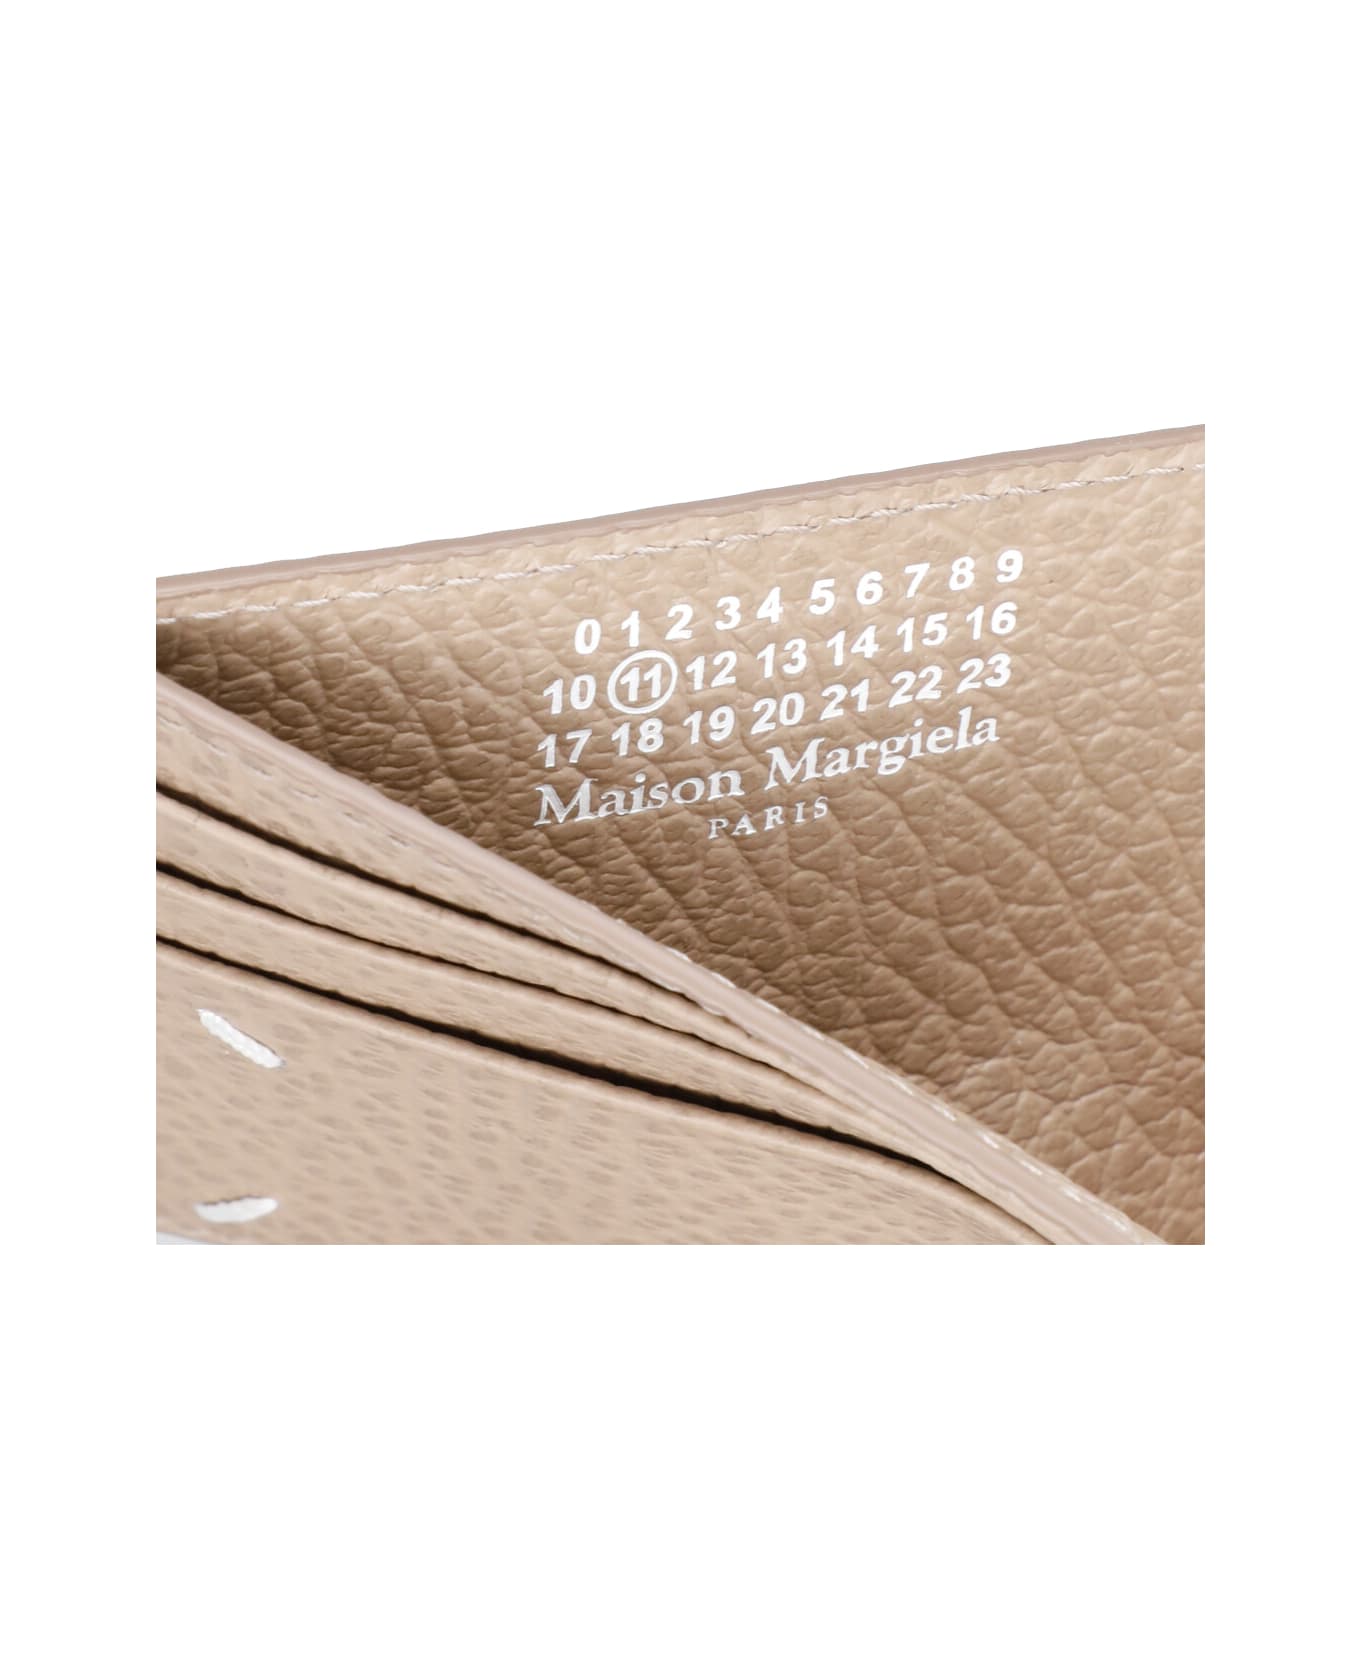 Maison Margiela Four Stitches Card Holder - Biche